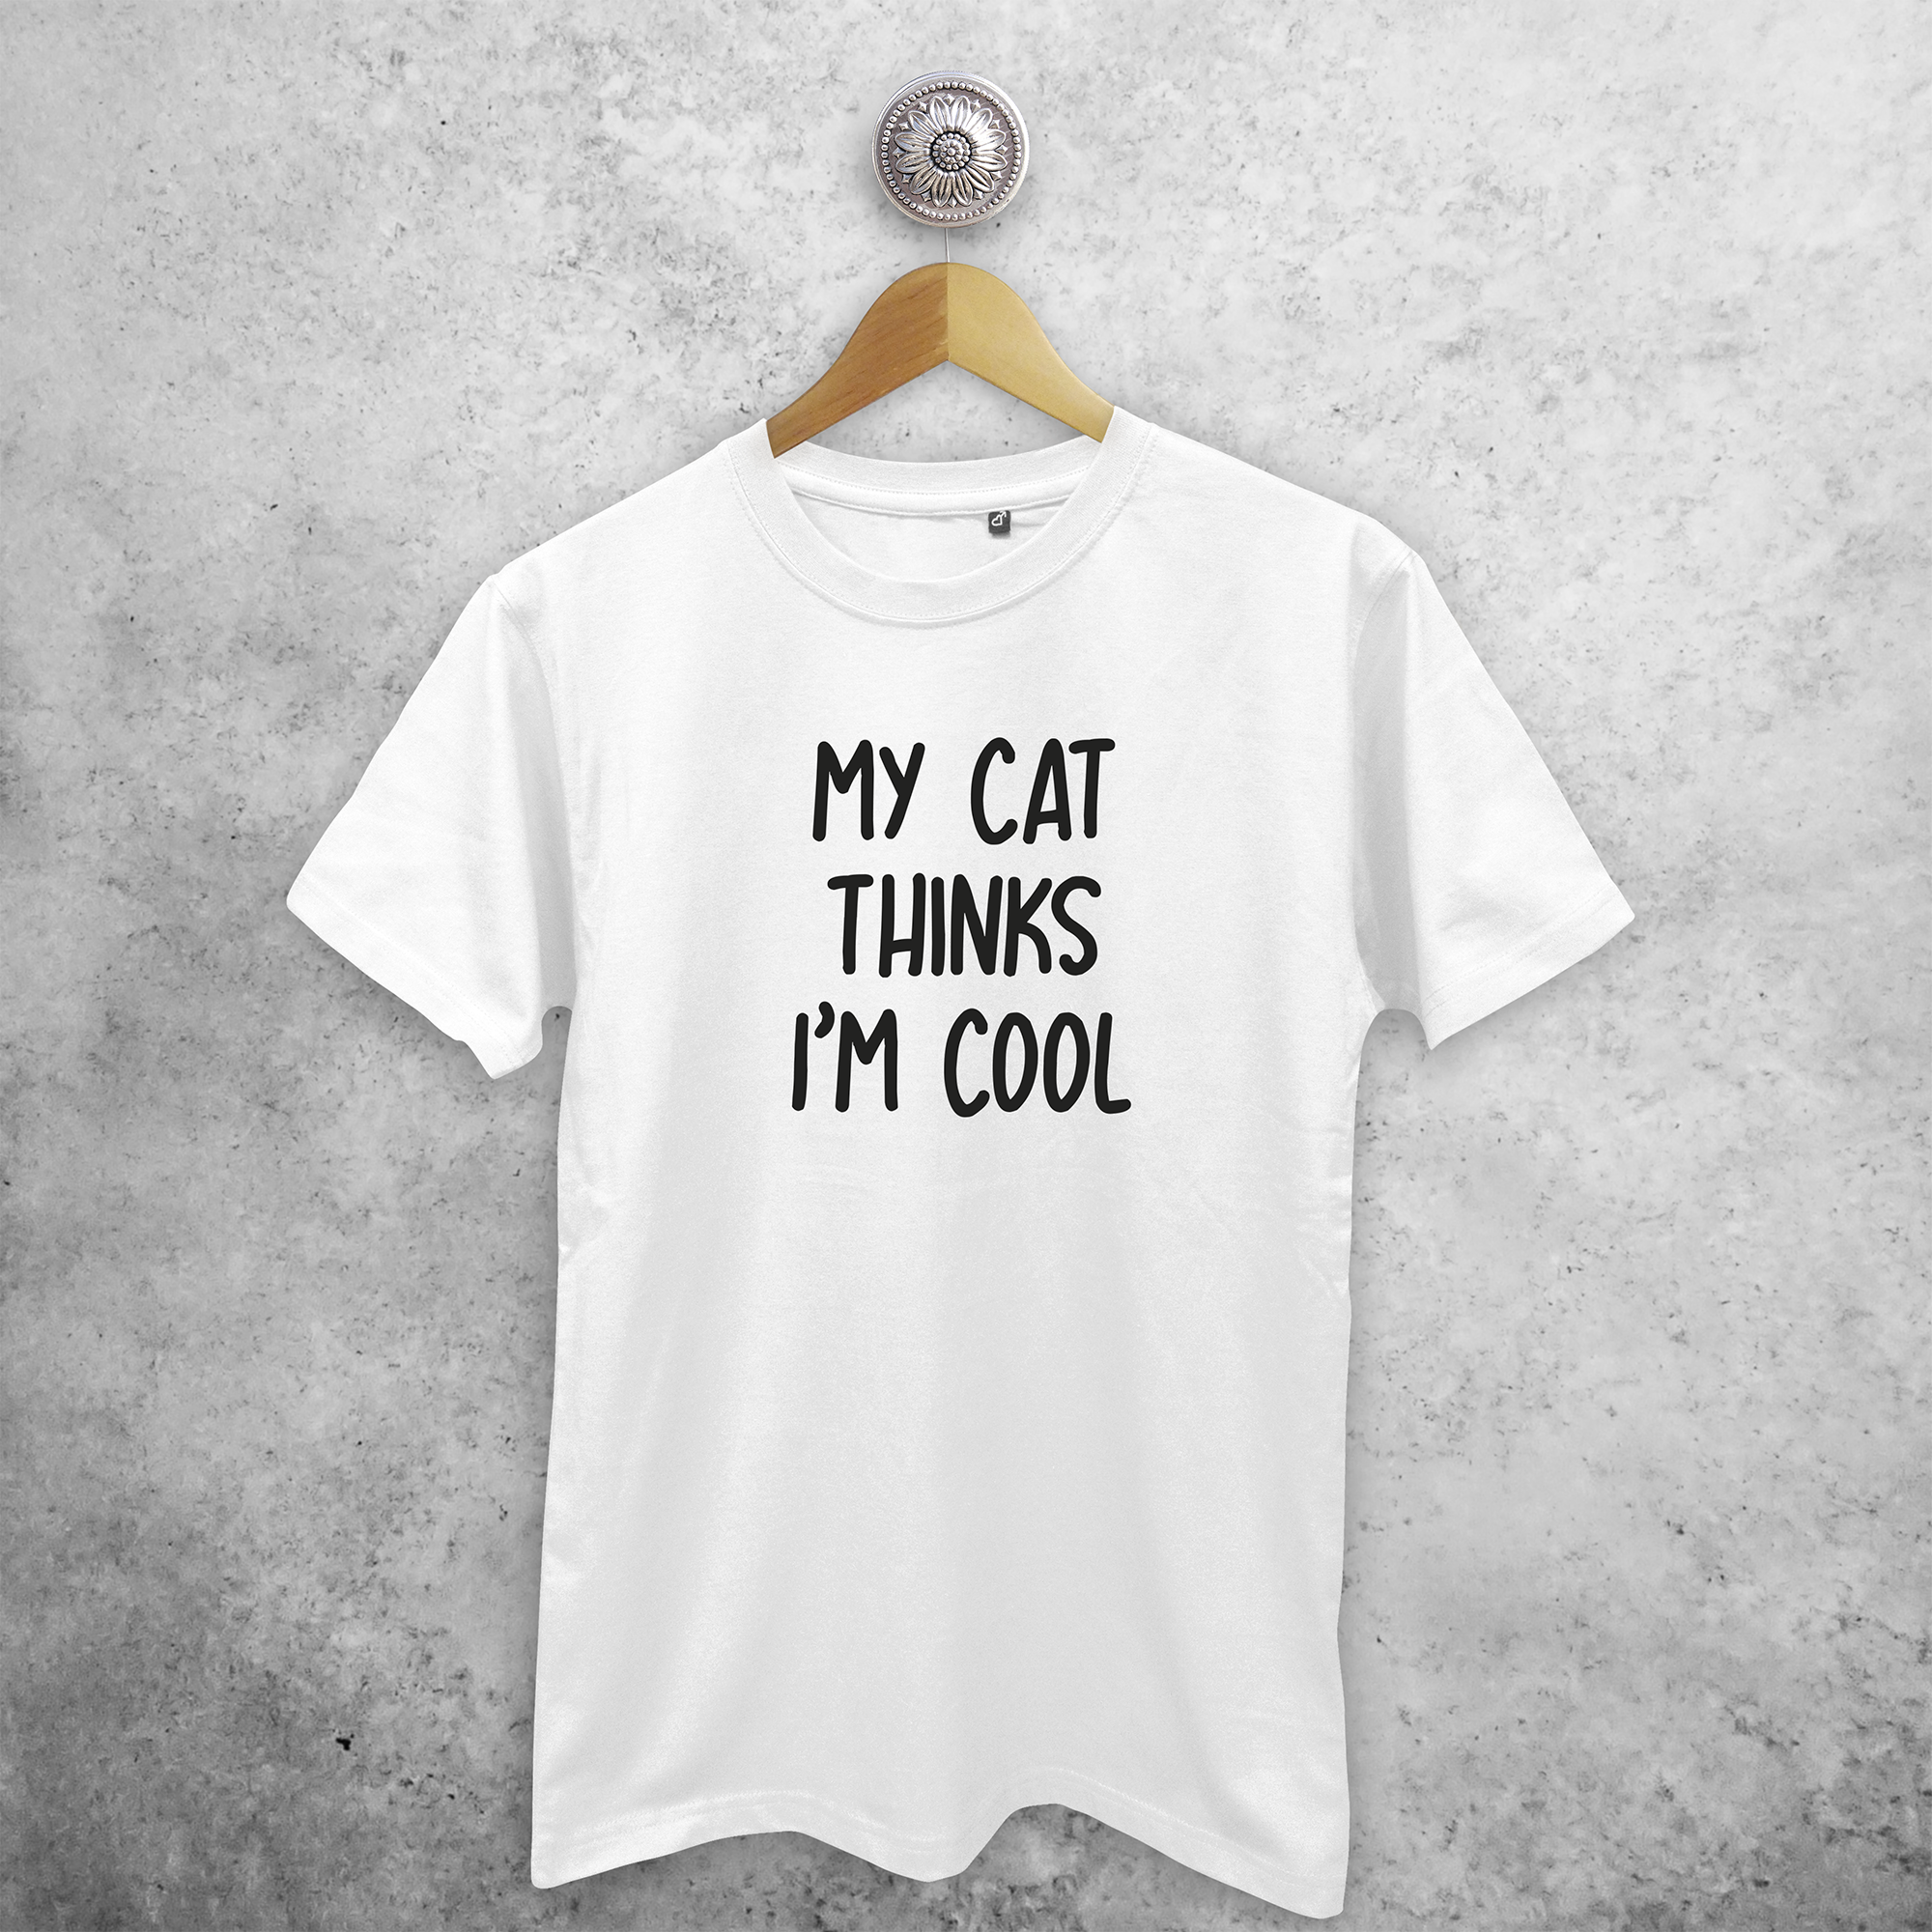 'My cat thinks I'm cool' adult shirt